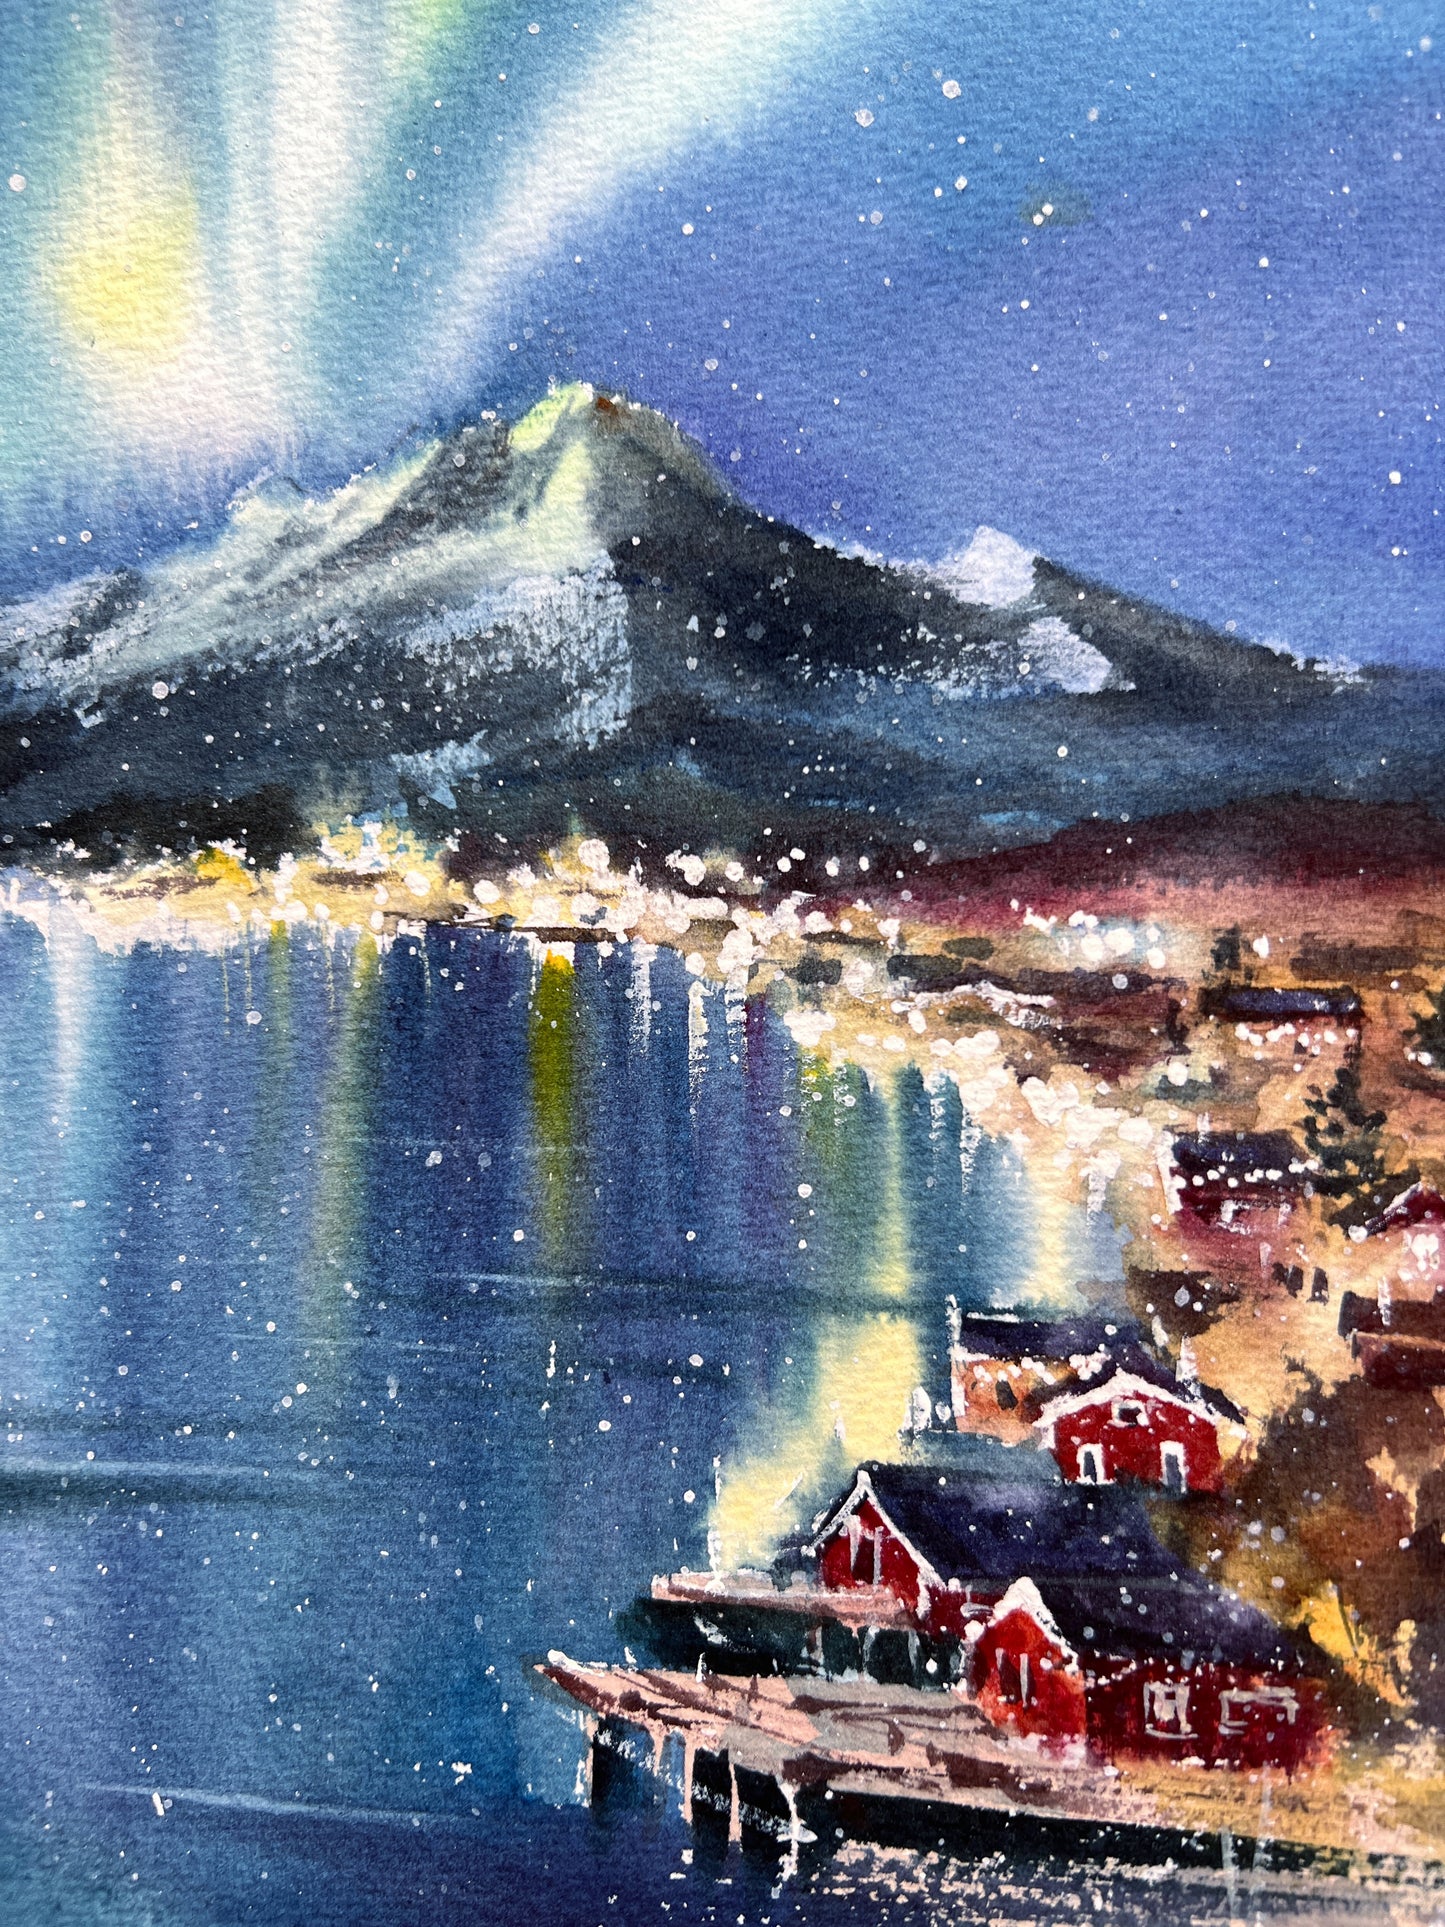 Lofoten Islands Painting Original, Red House Wall Art Decor, Watercolor Winter Landscape, Norway Village, Gift